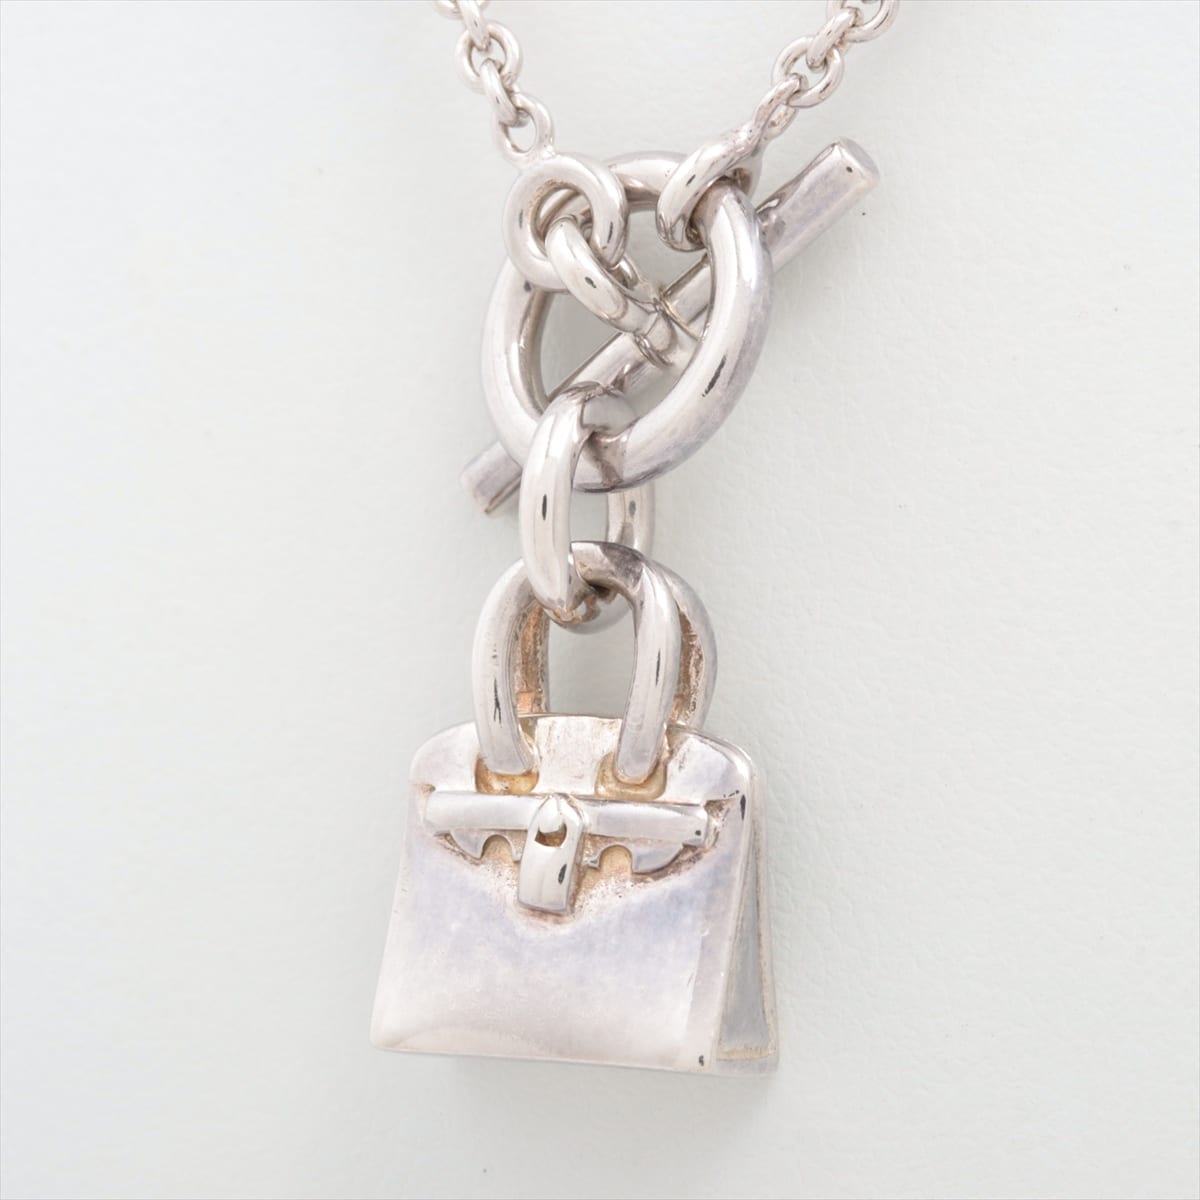 Hermès Birkin Amulet Necklace 925 11.8g Silver